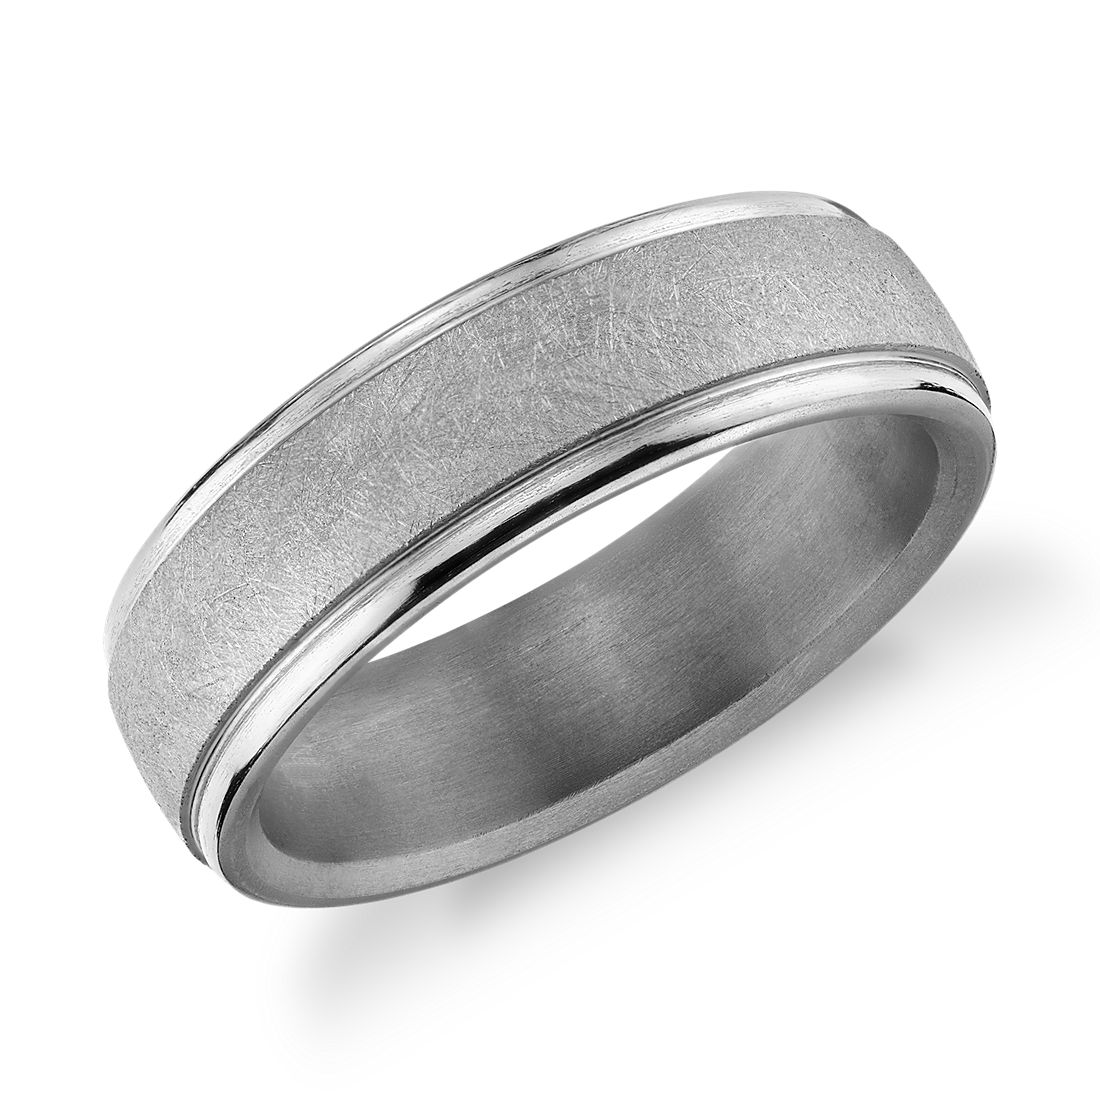 Round Edge Swirl Finish Wedding Ring in Tantalum (6.5 mm)